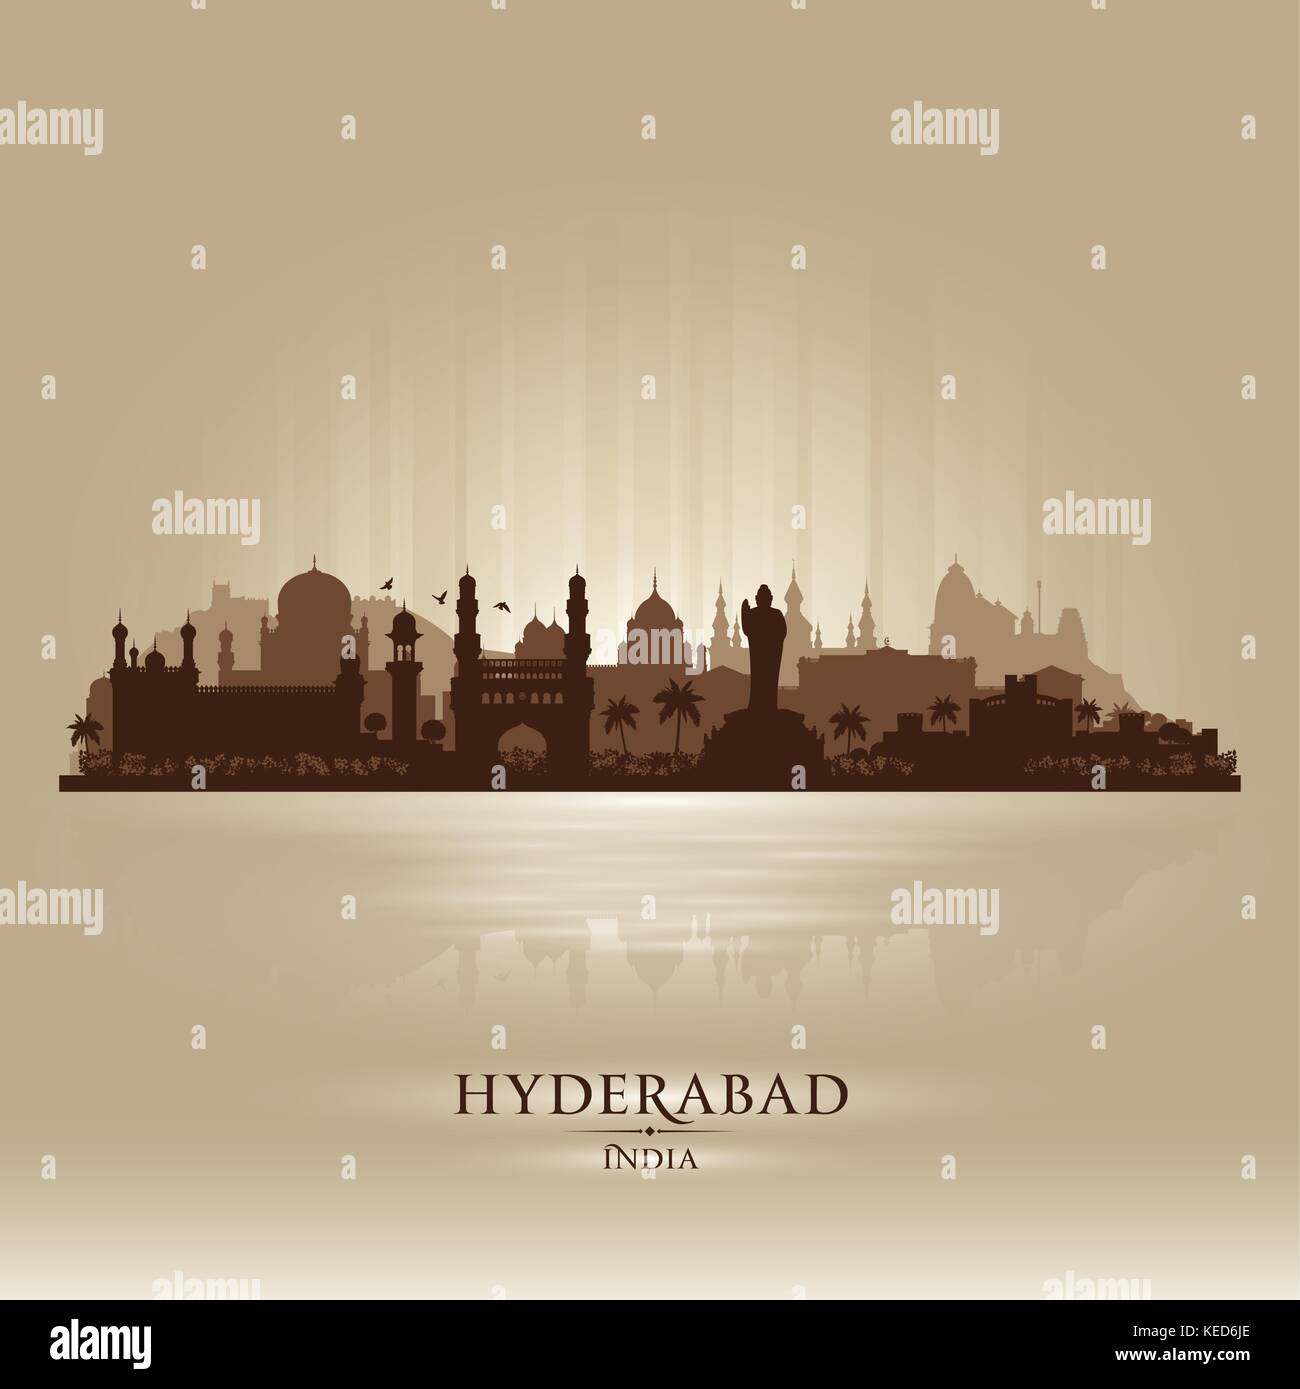 Hyderabad India city skyline vector silhouette illustration Stock Vector